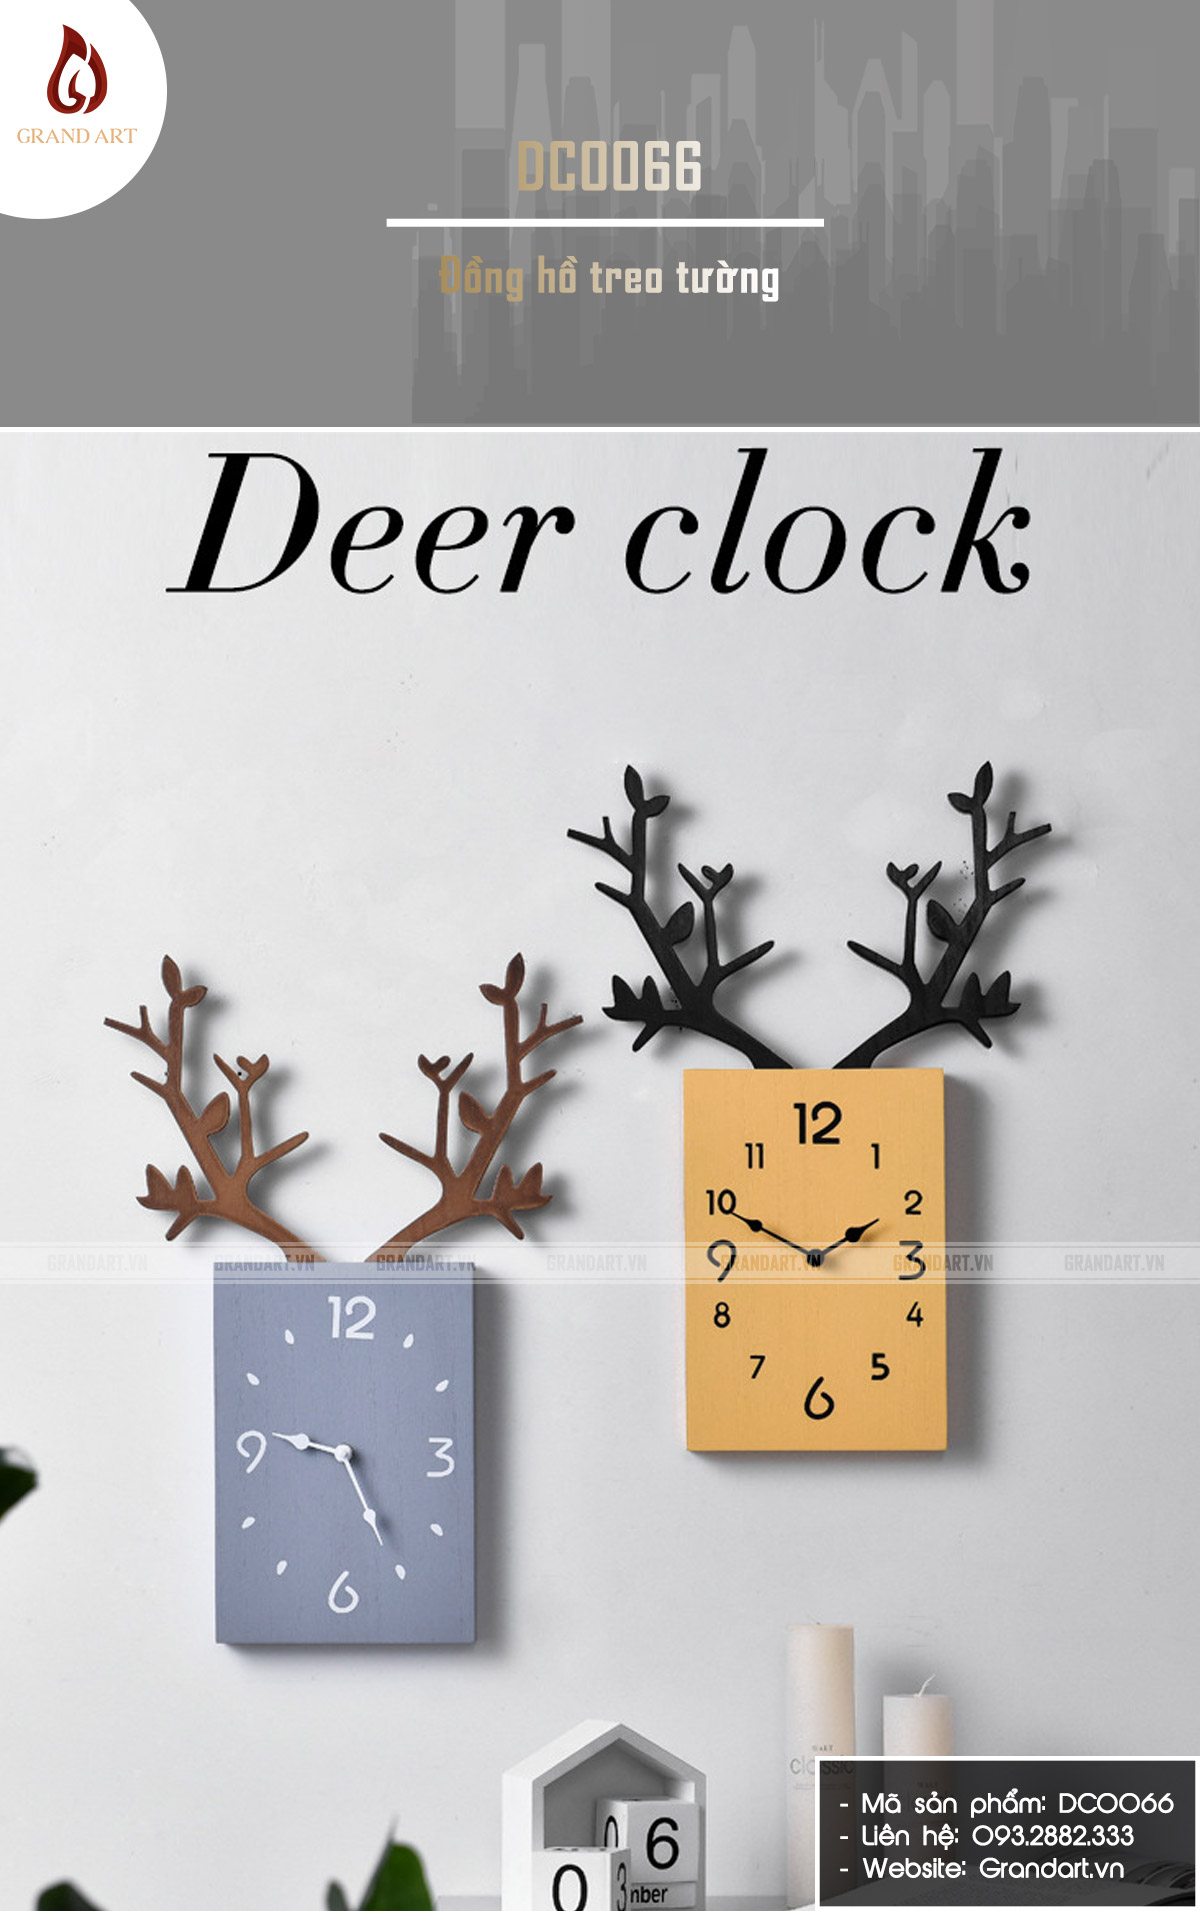 Deer clock - DC0066